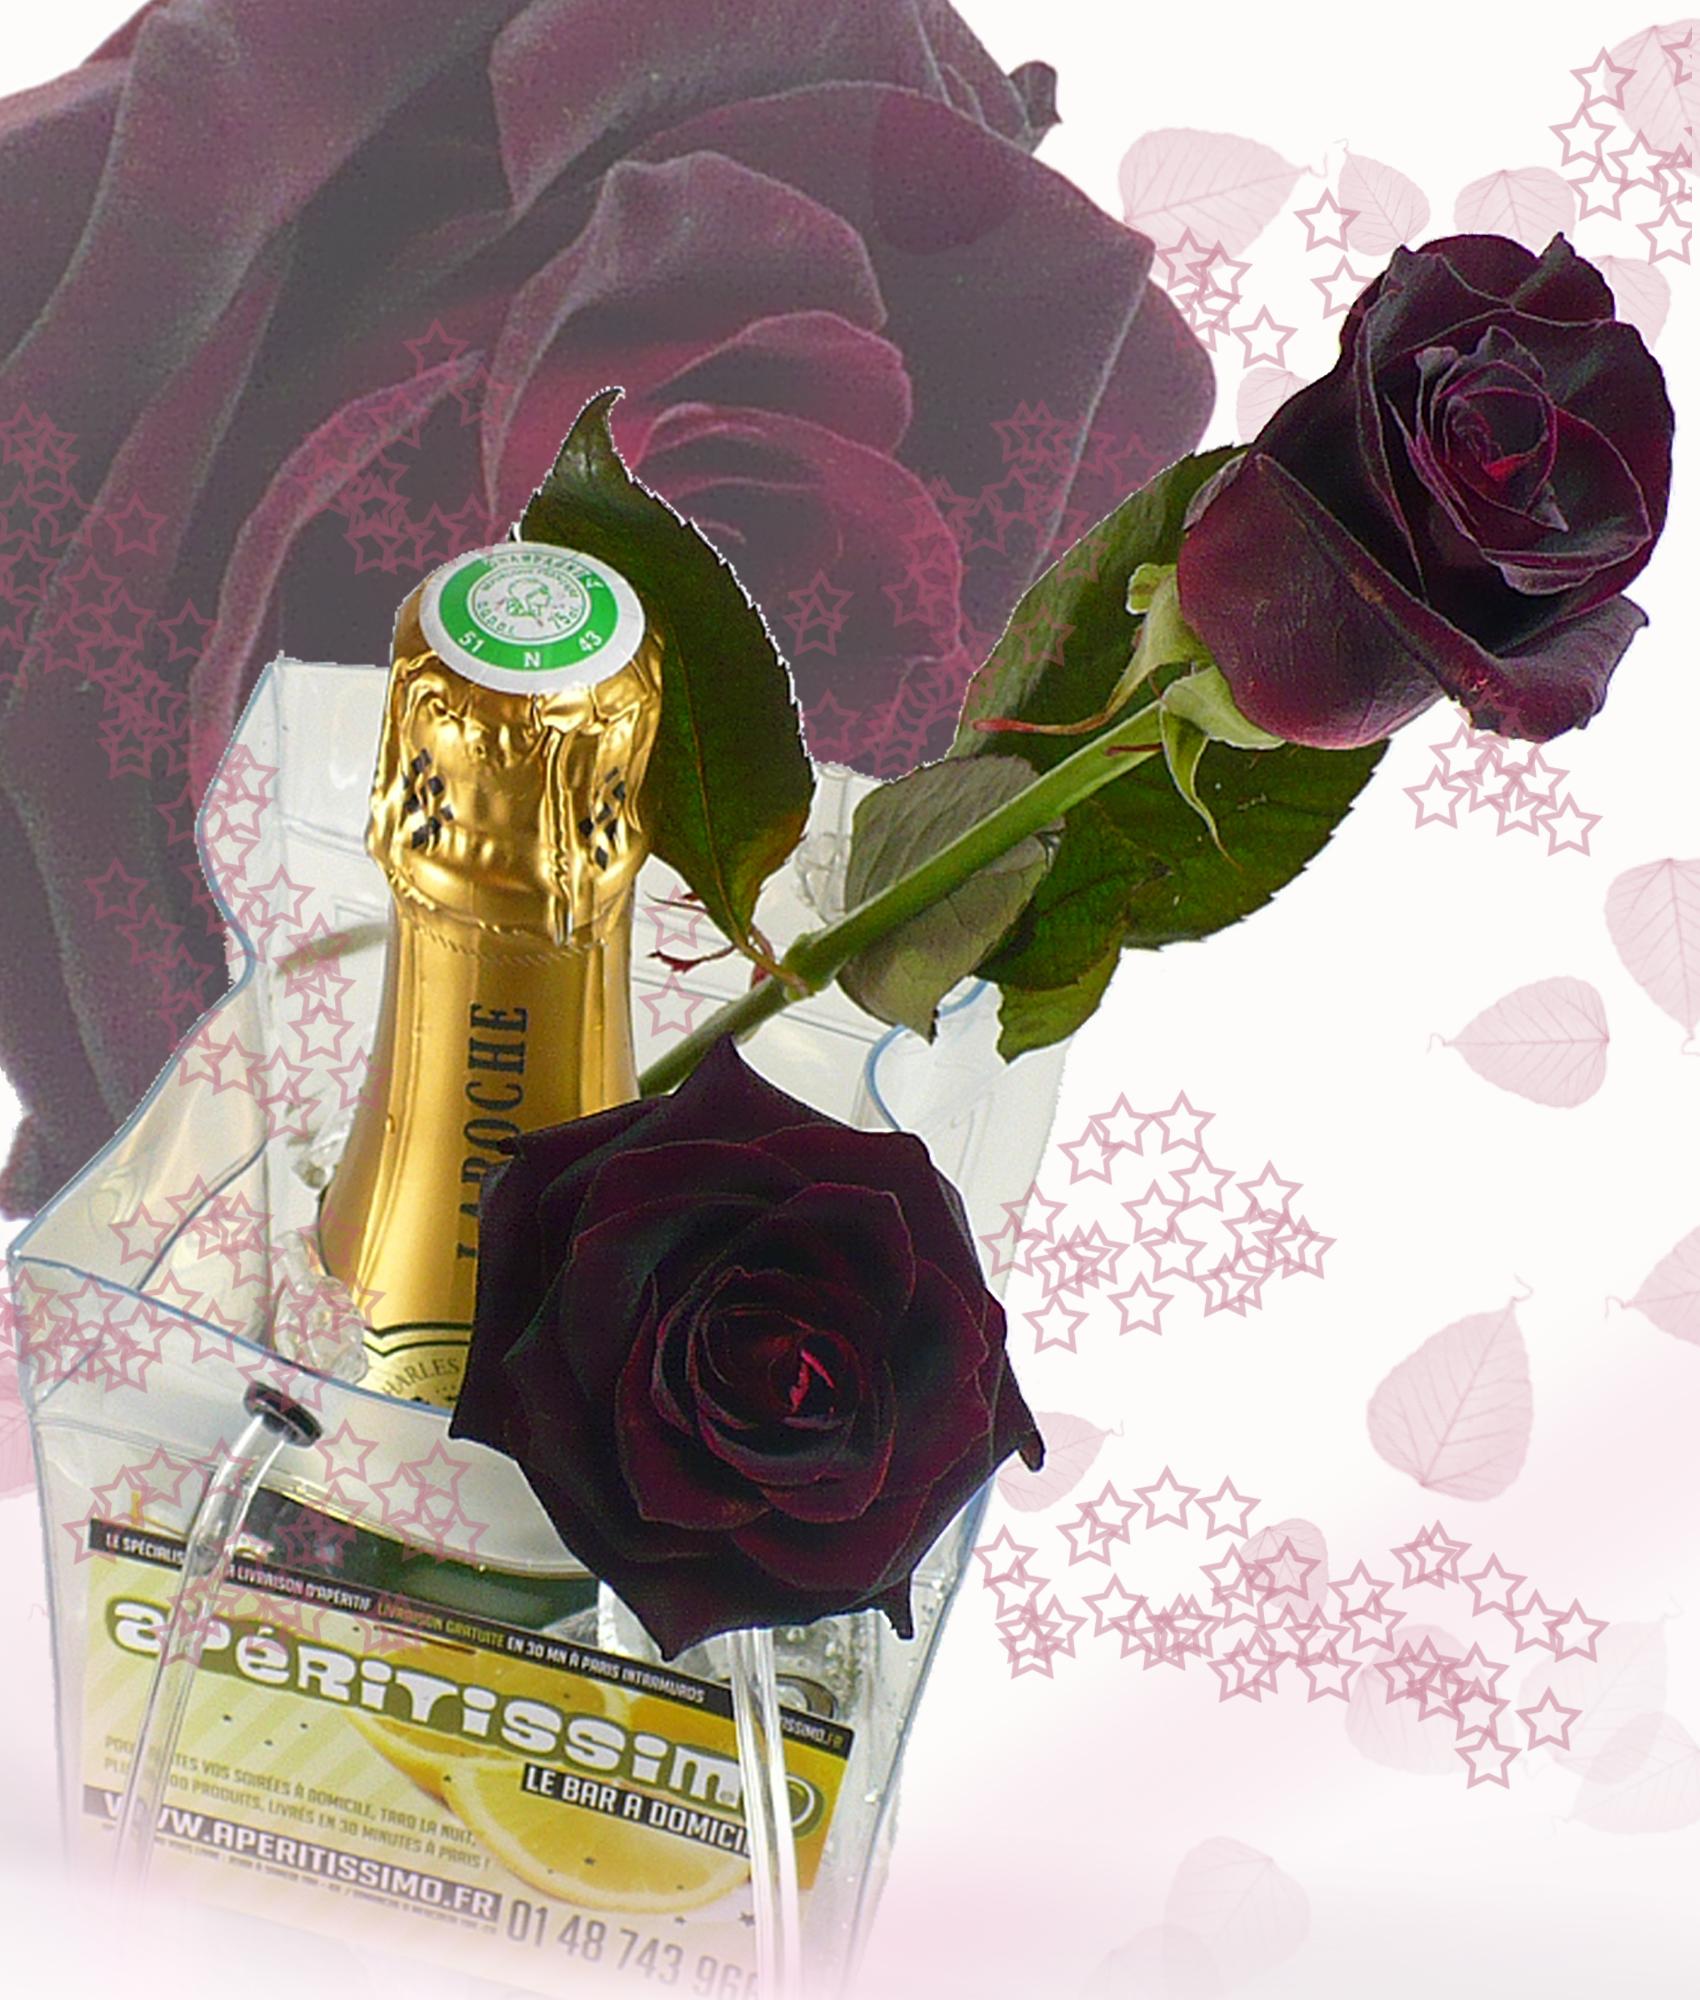 st-valentain-2009-champagne-ace-bag-rose-2.jpg